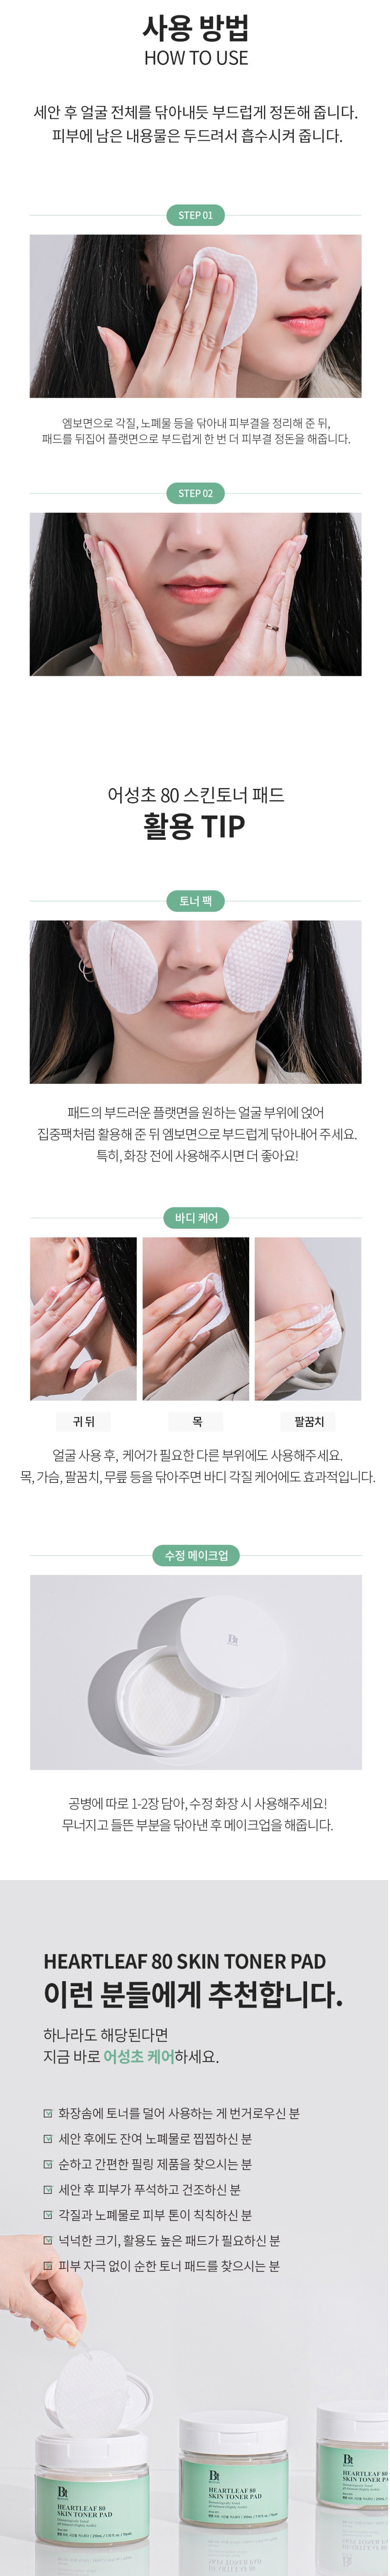 Benton Heartleaf 80 Skin Toner Pad korean skincare product online shop malaysia China romania3